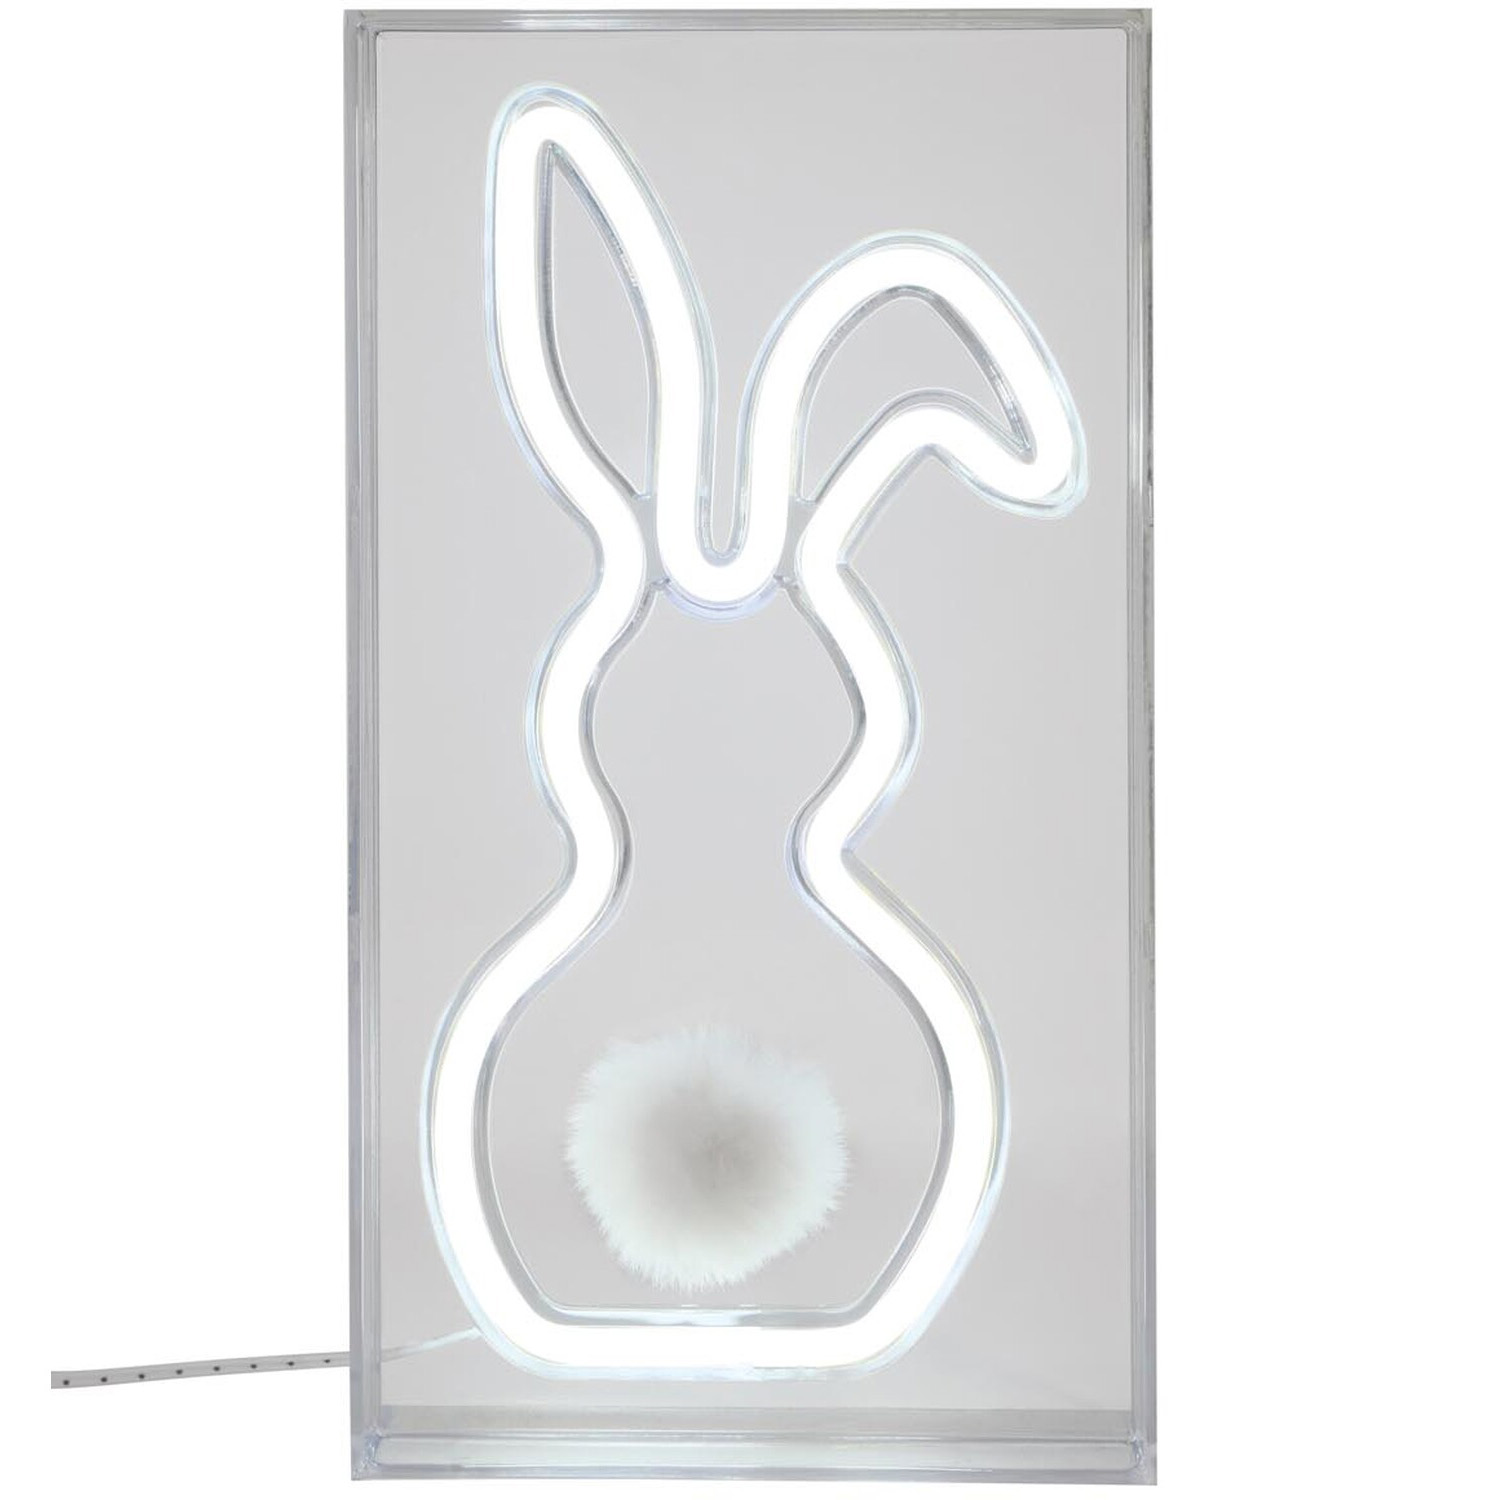 Neon Bunny Light - White Image 1